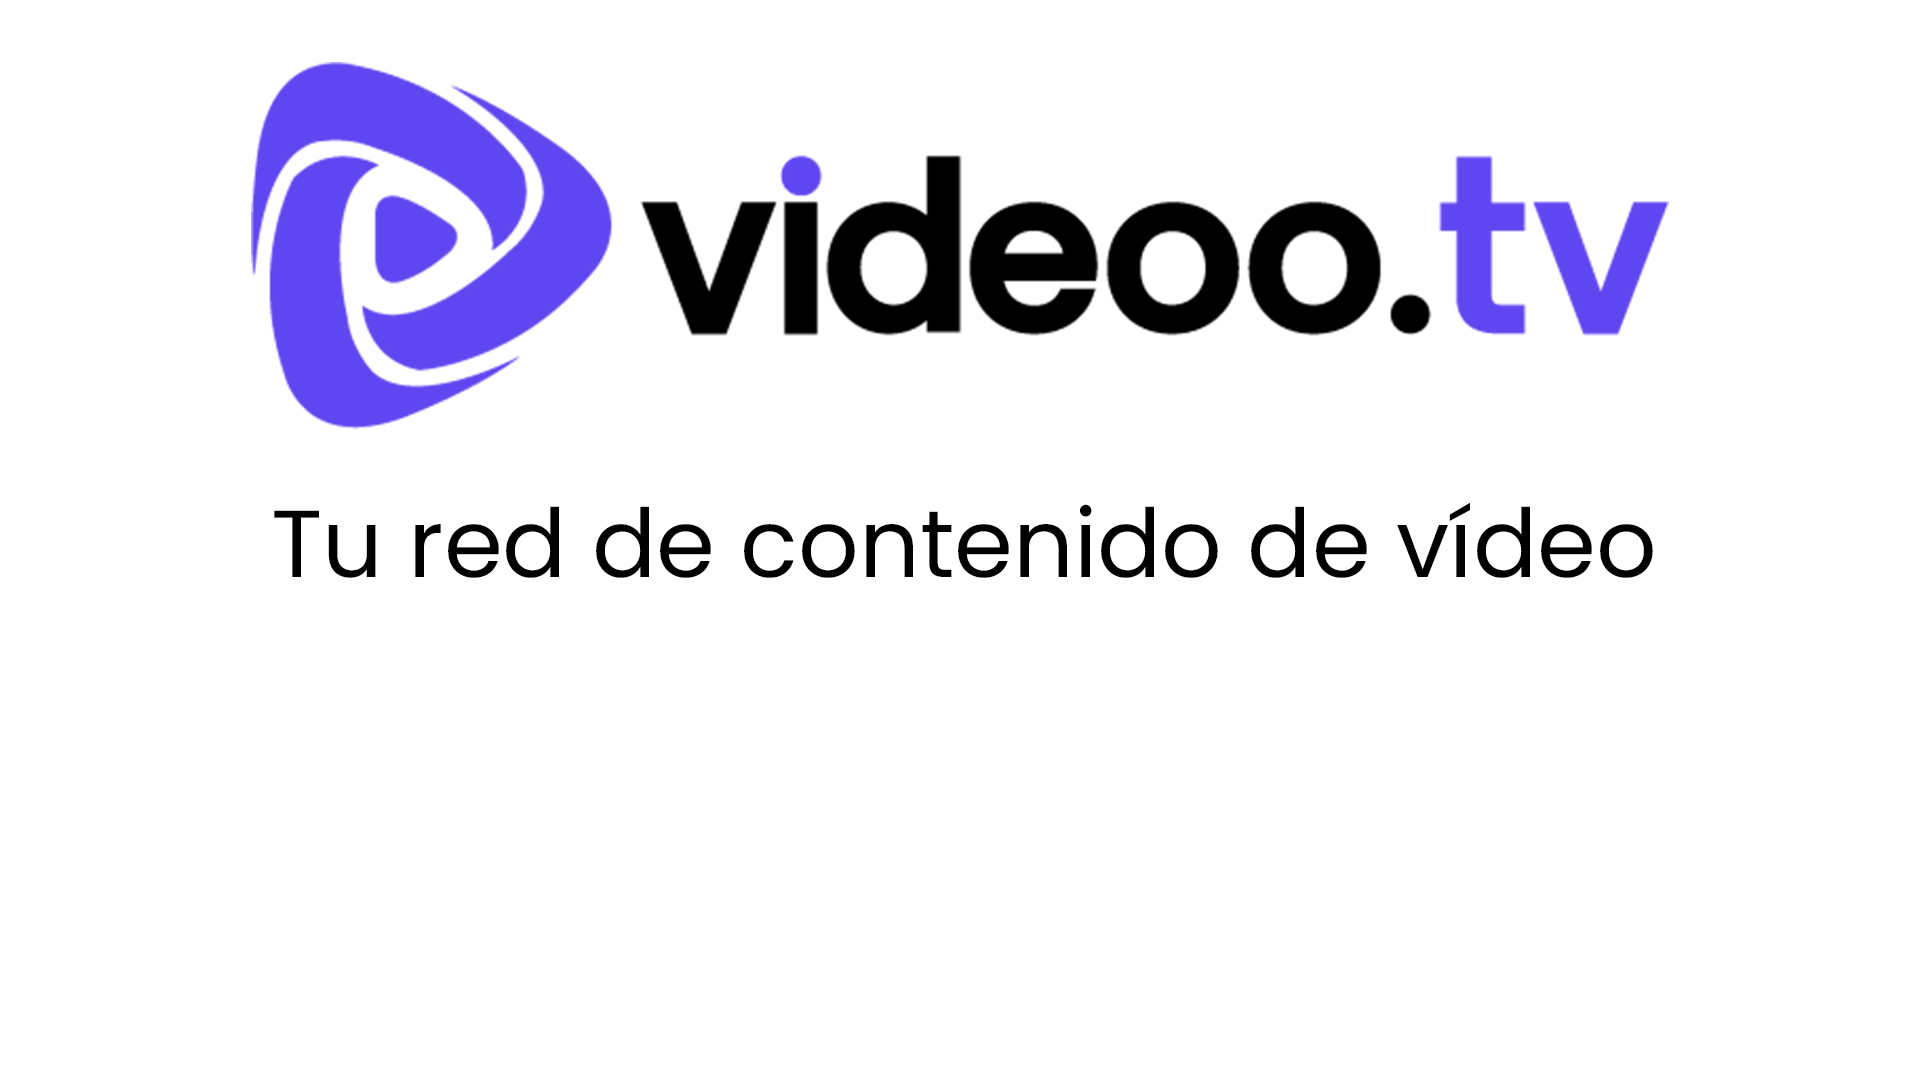 Videoo.tv (English)